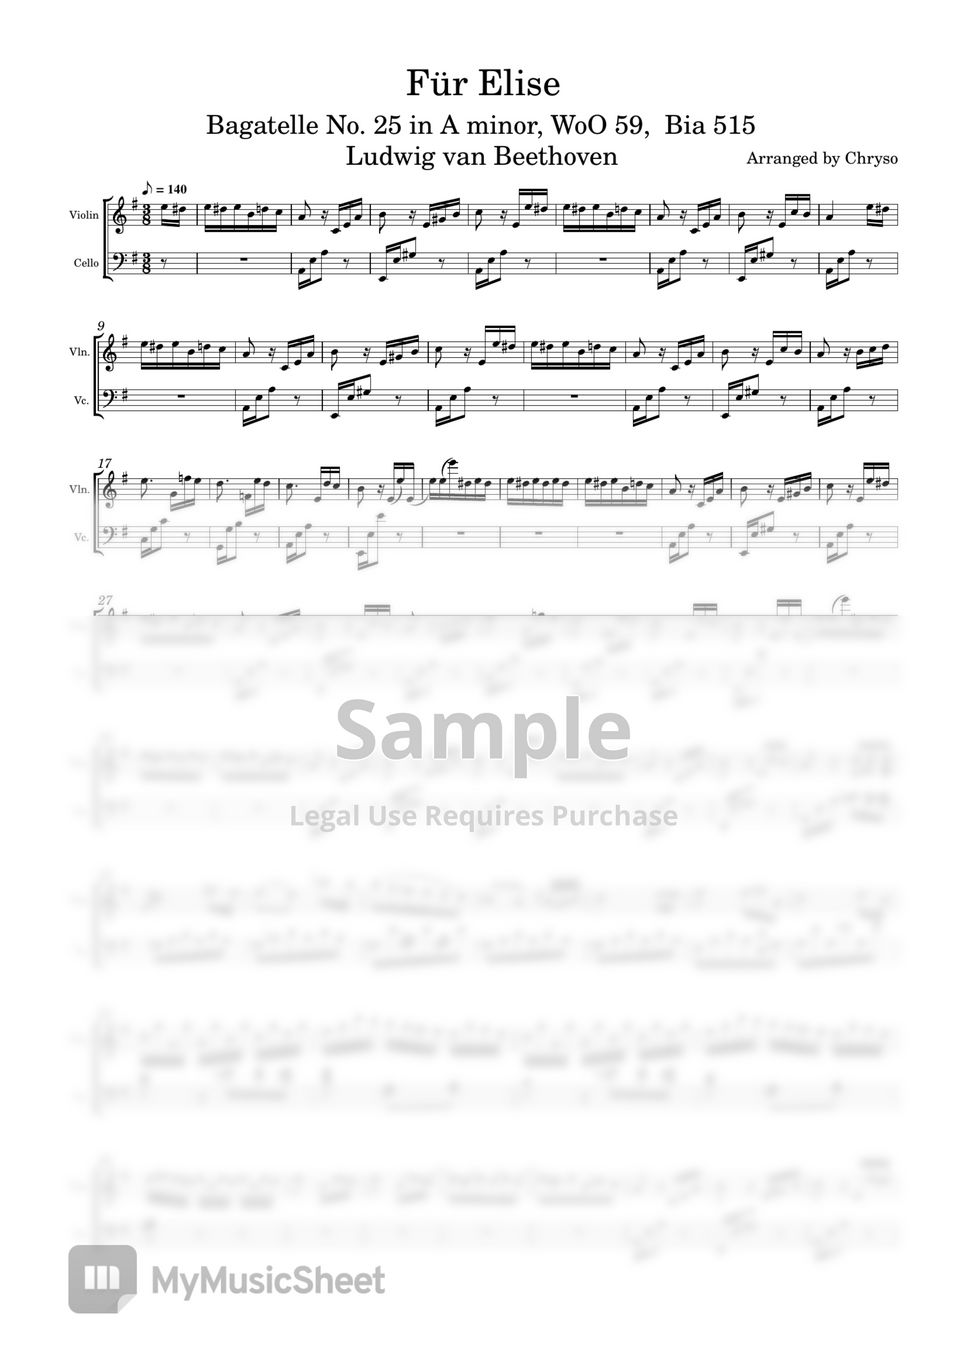 Ludwig van Beethoven - 54. Für Elise (pdf) by Chryso_Chrysoberyl